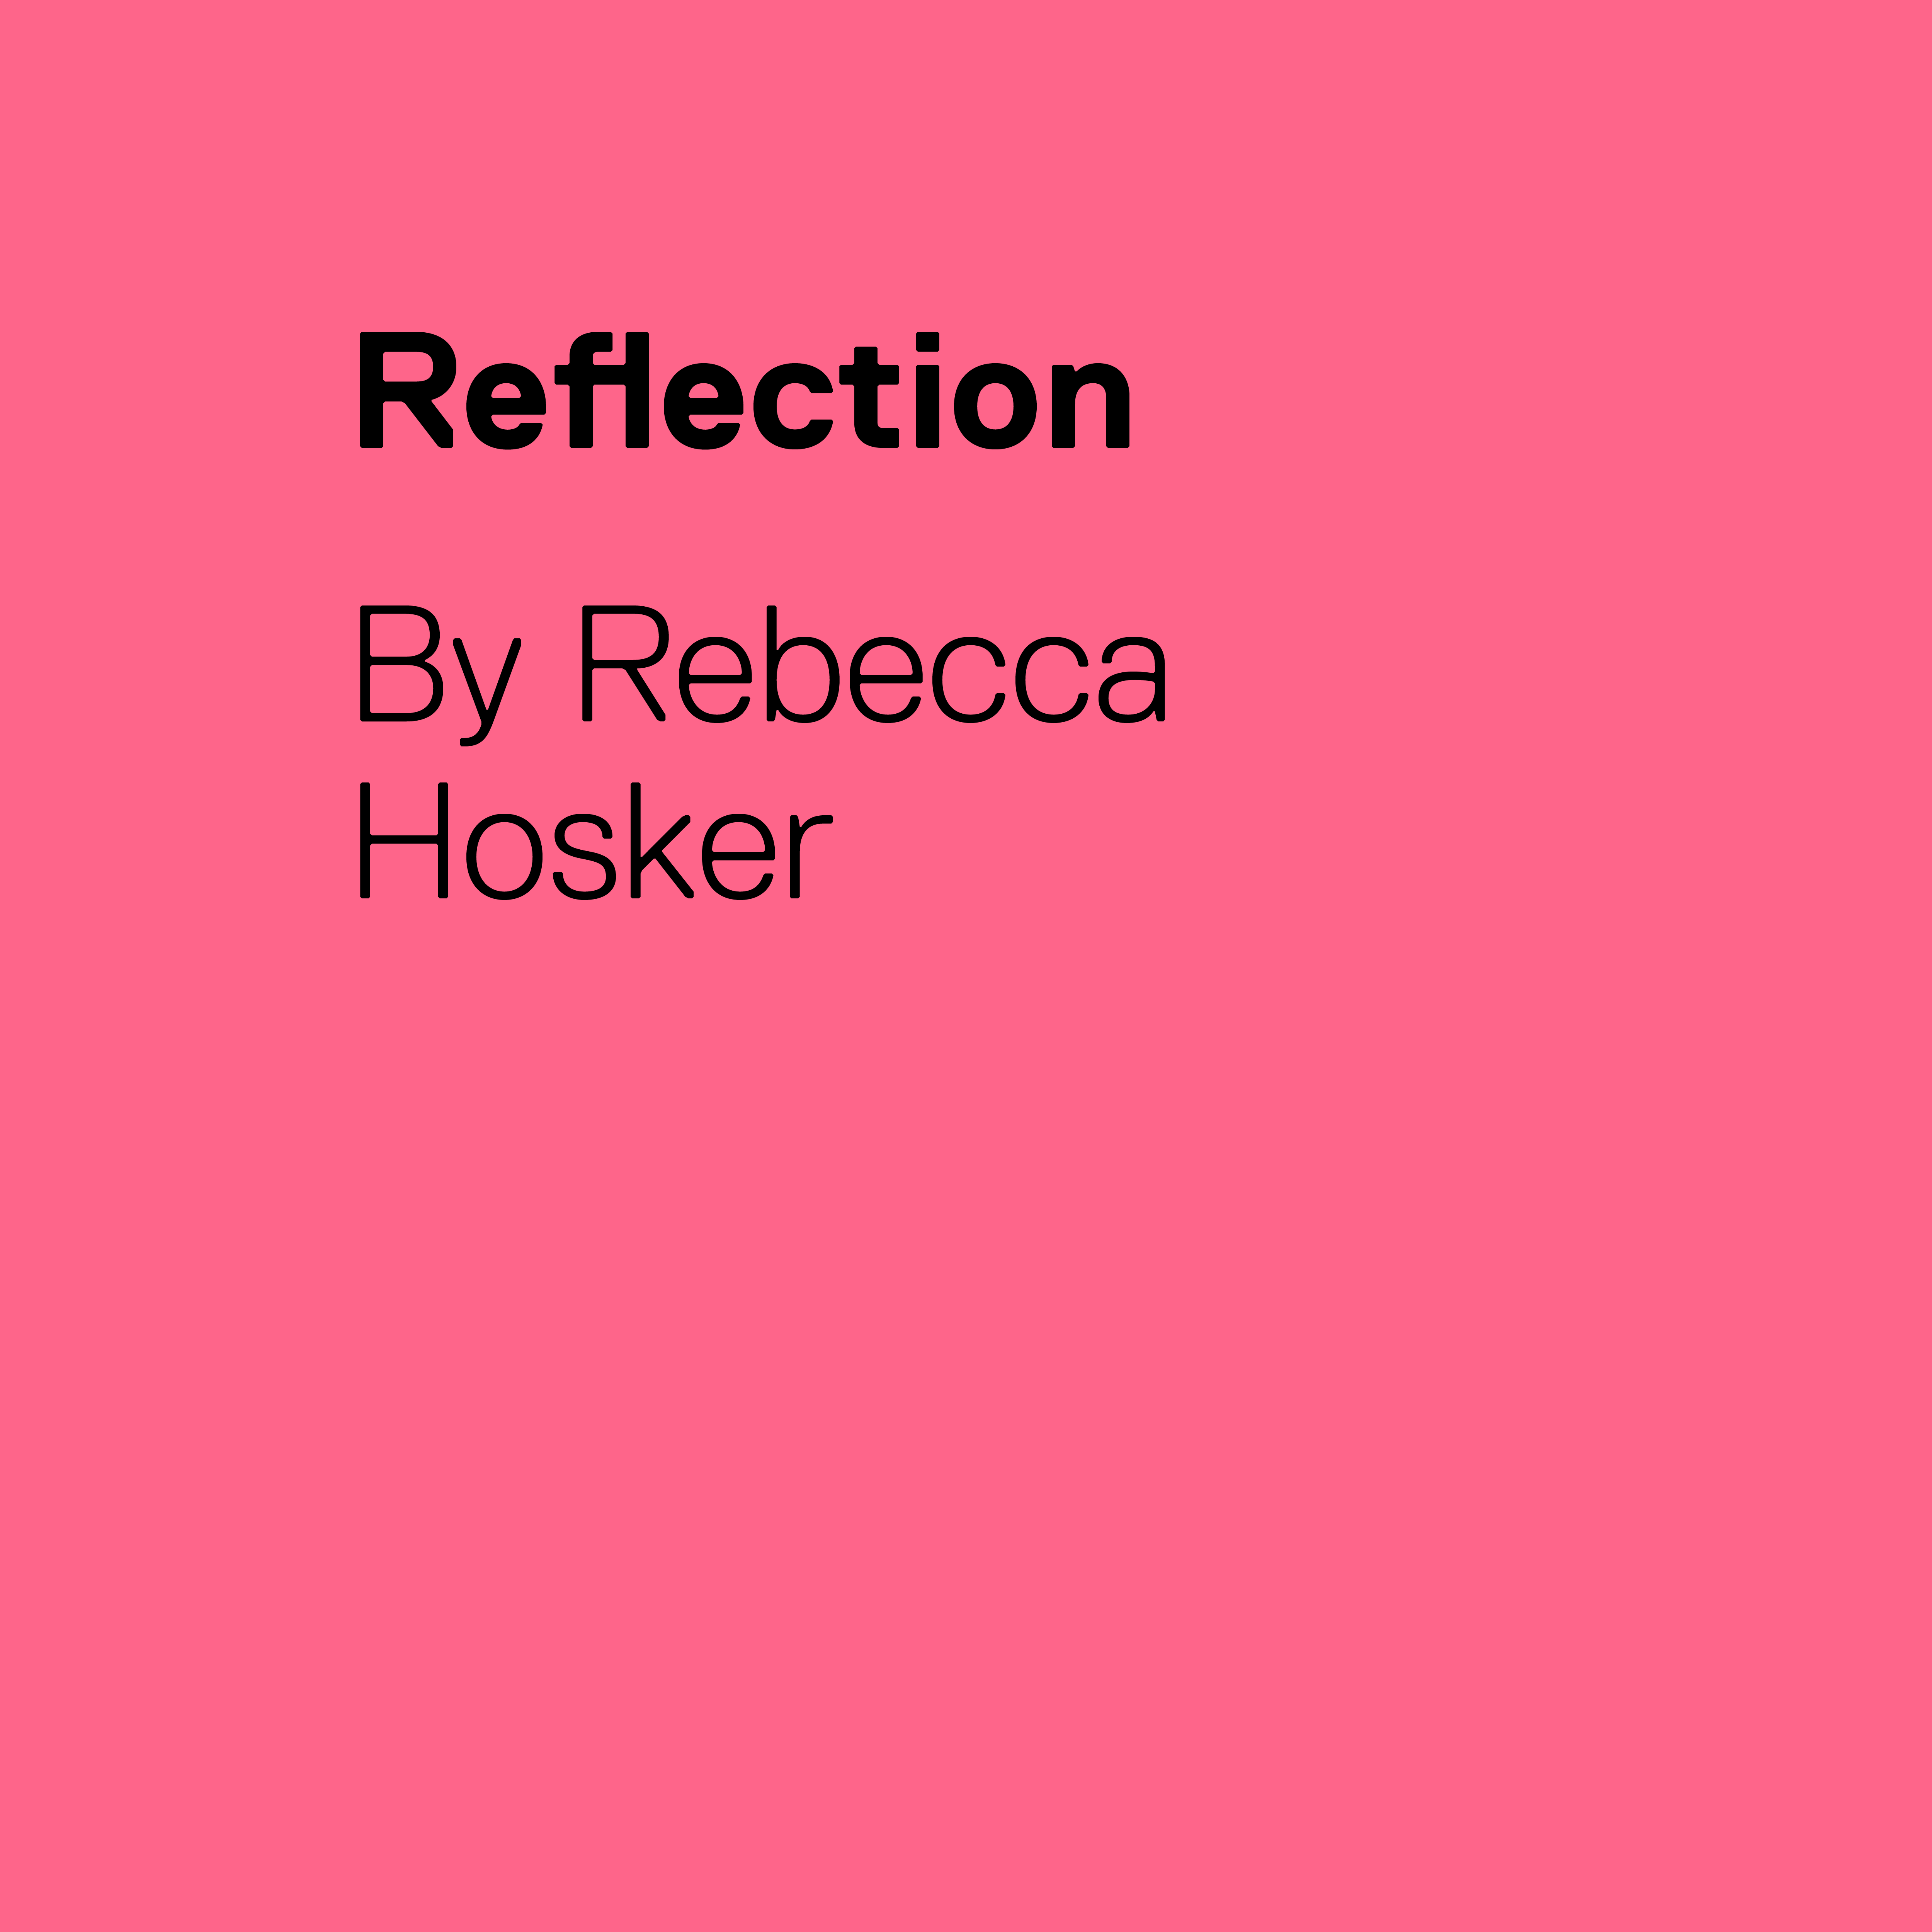 Rebecca Hosker